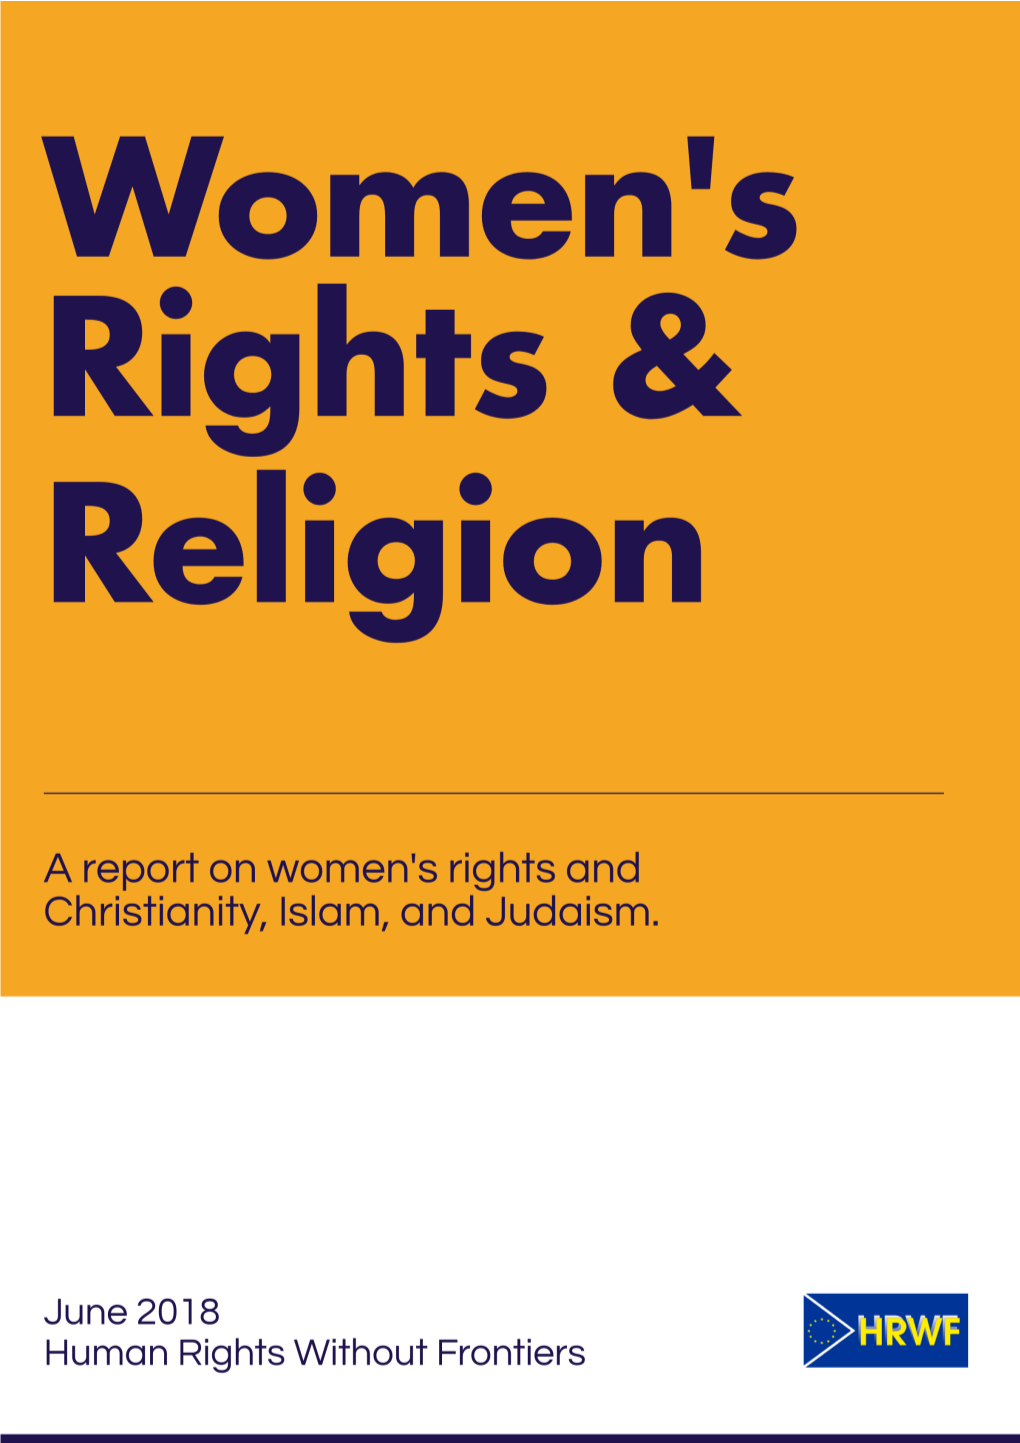 Women's Rights & Religion